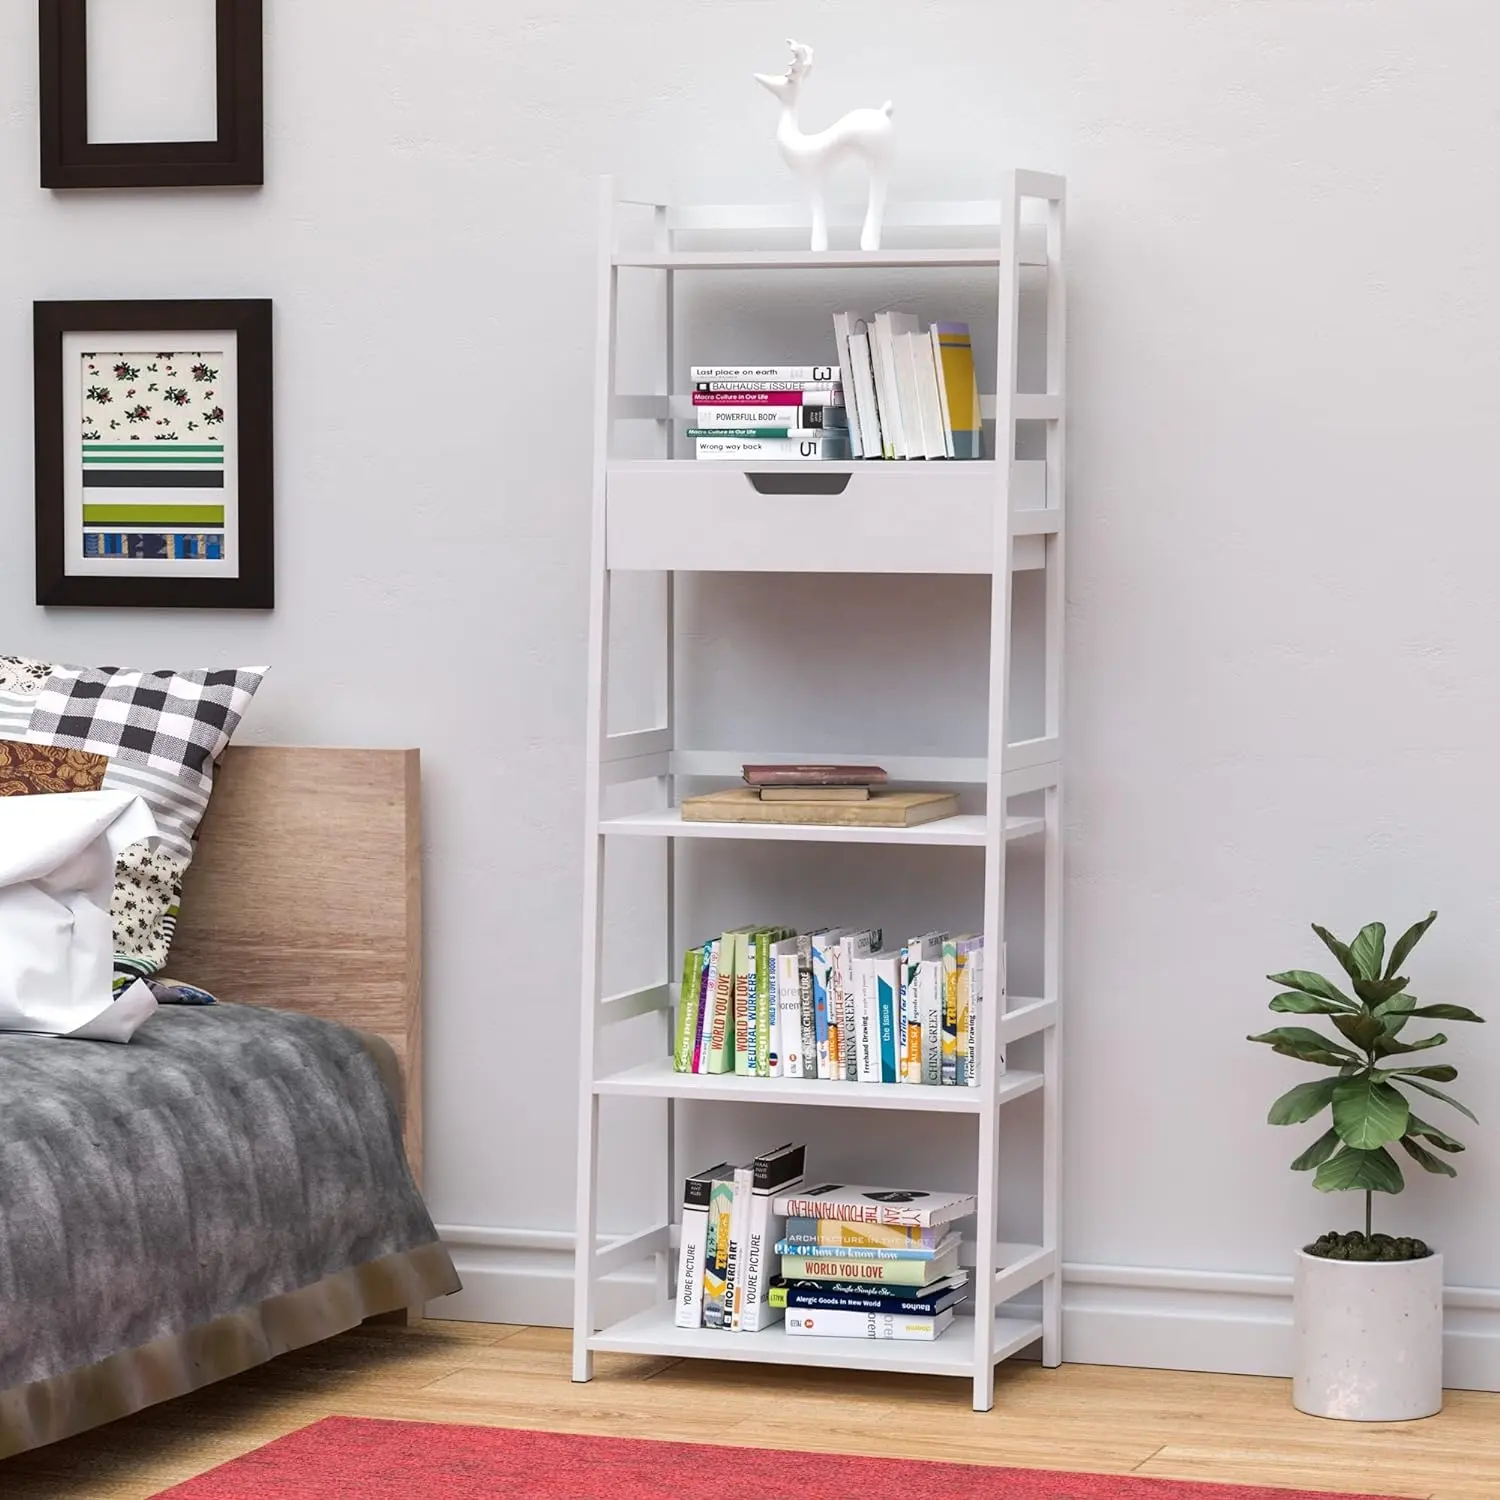 Upgraded Bookshelf Book Shelf with Drawers  Bookcase Storage Shelves Book case  Ladder Shelf for Bedroom  Living Room  White